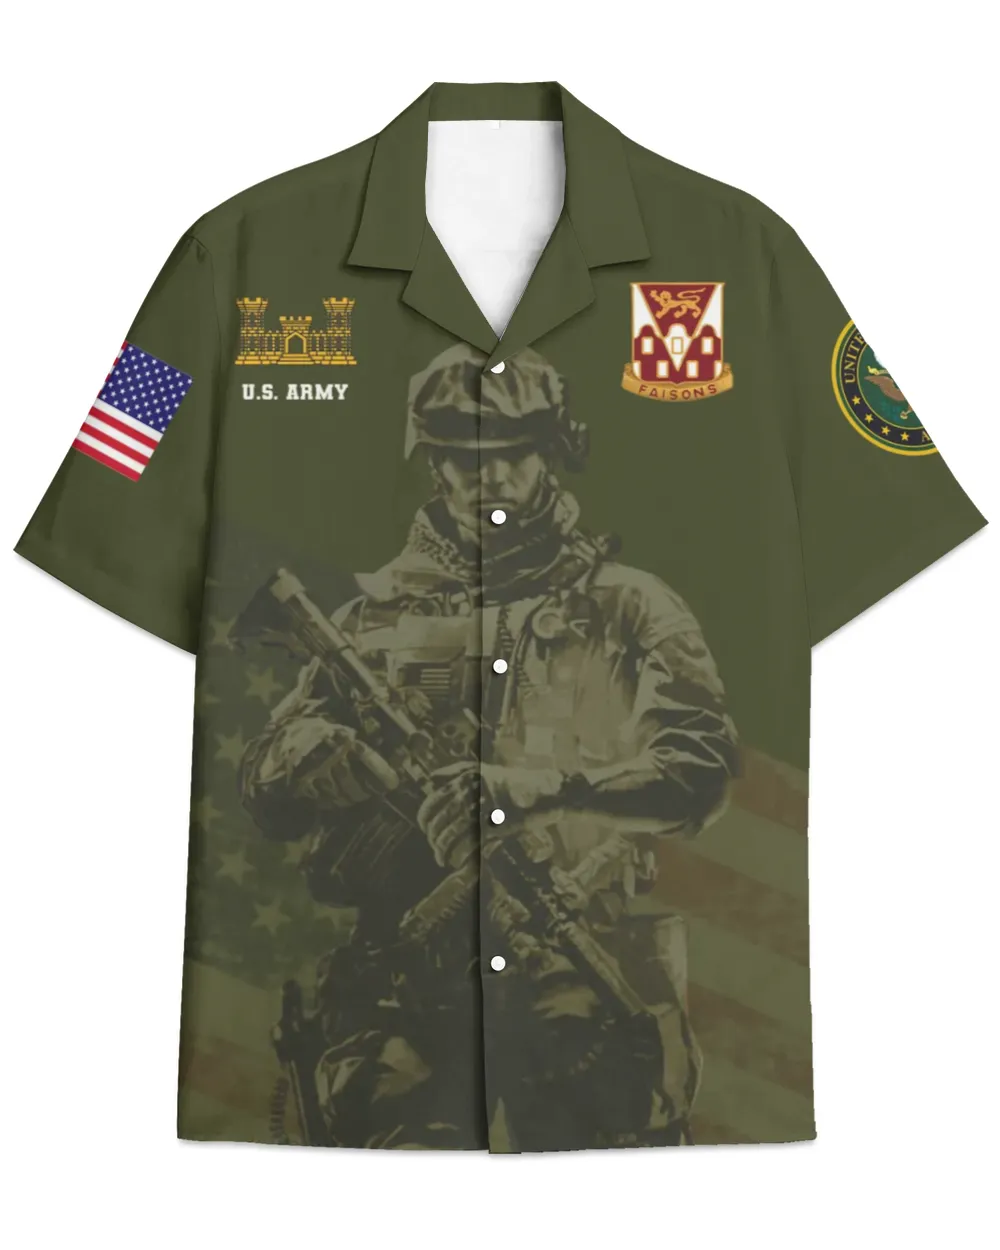 368th Engineer Battalion Charlie Company Hawaiian Shirt